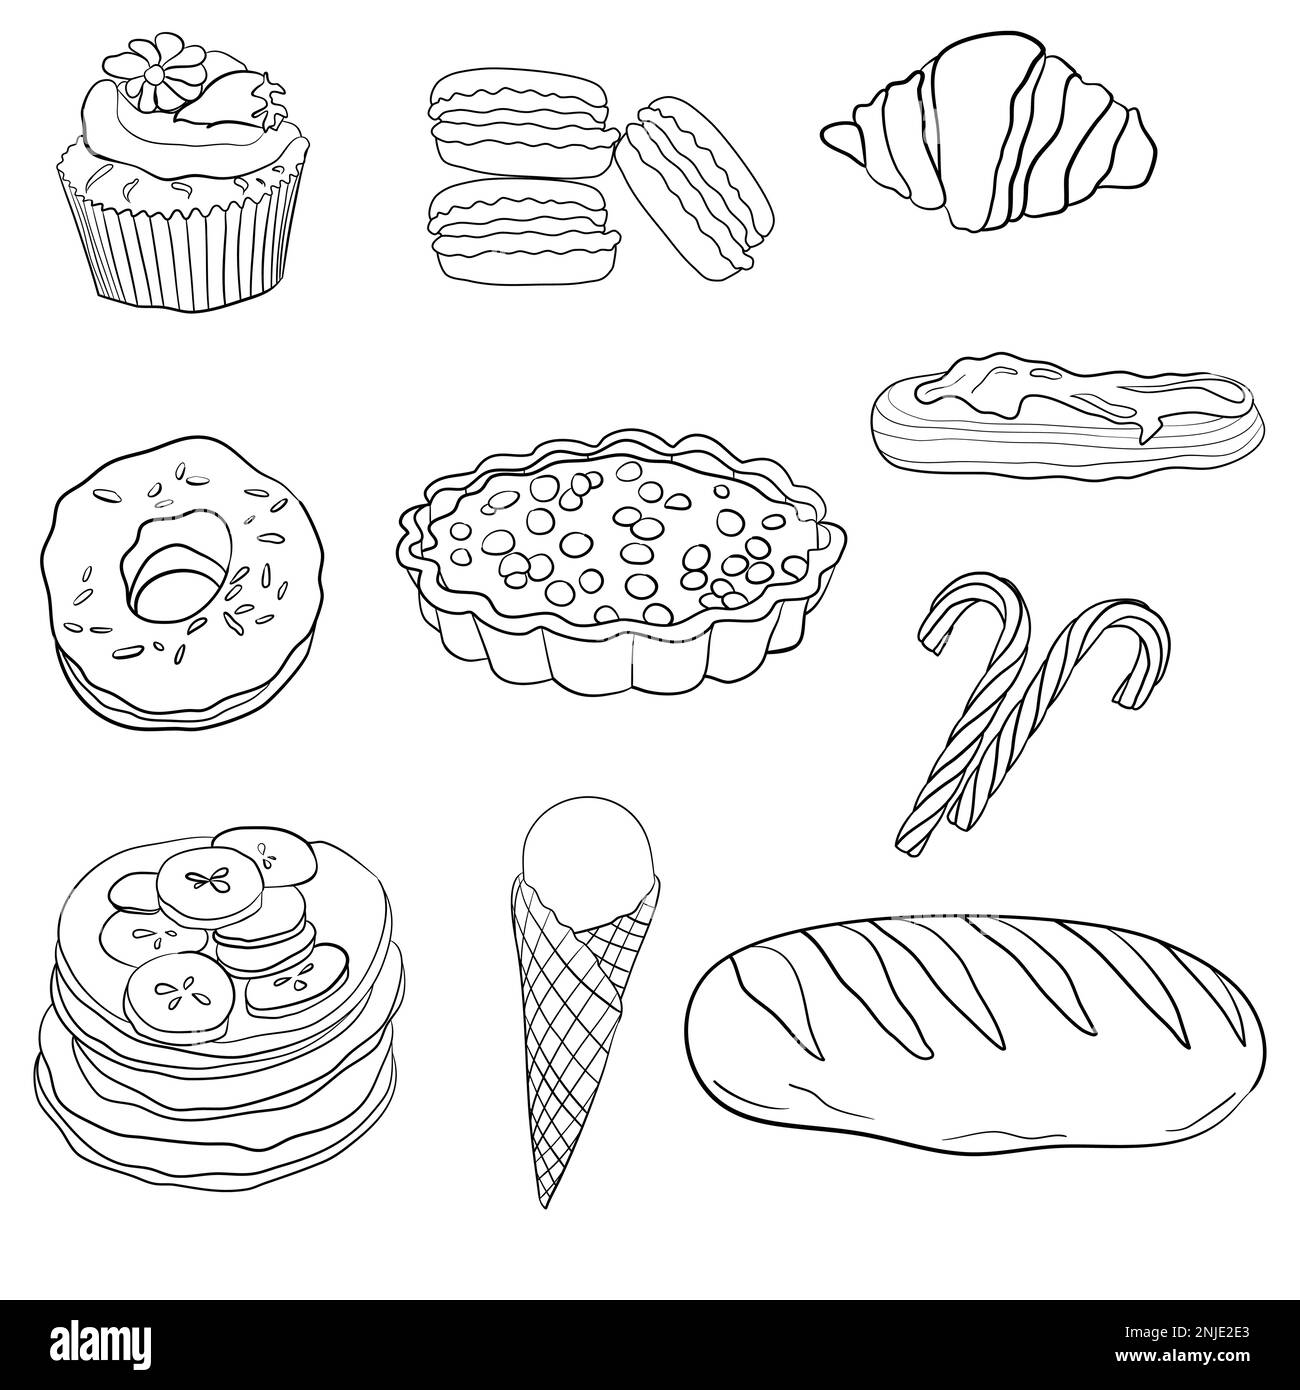 Dessert e dolci in tecnica doodle illustrazione vettoriale Illustrazione Vettoriale